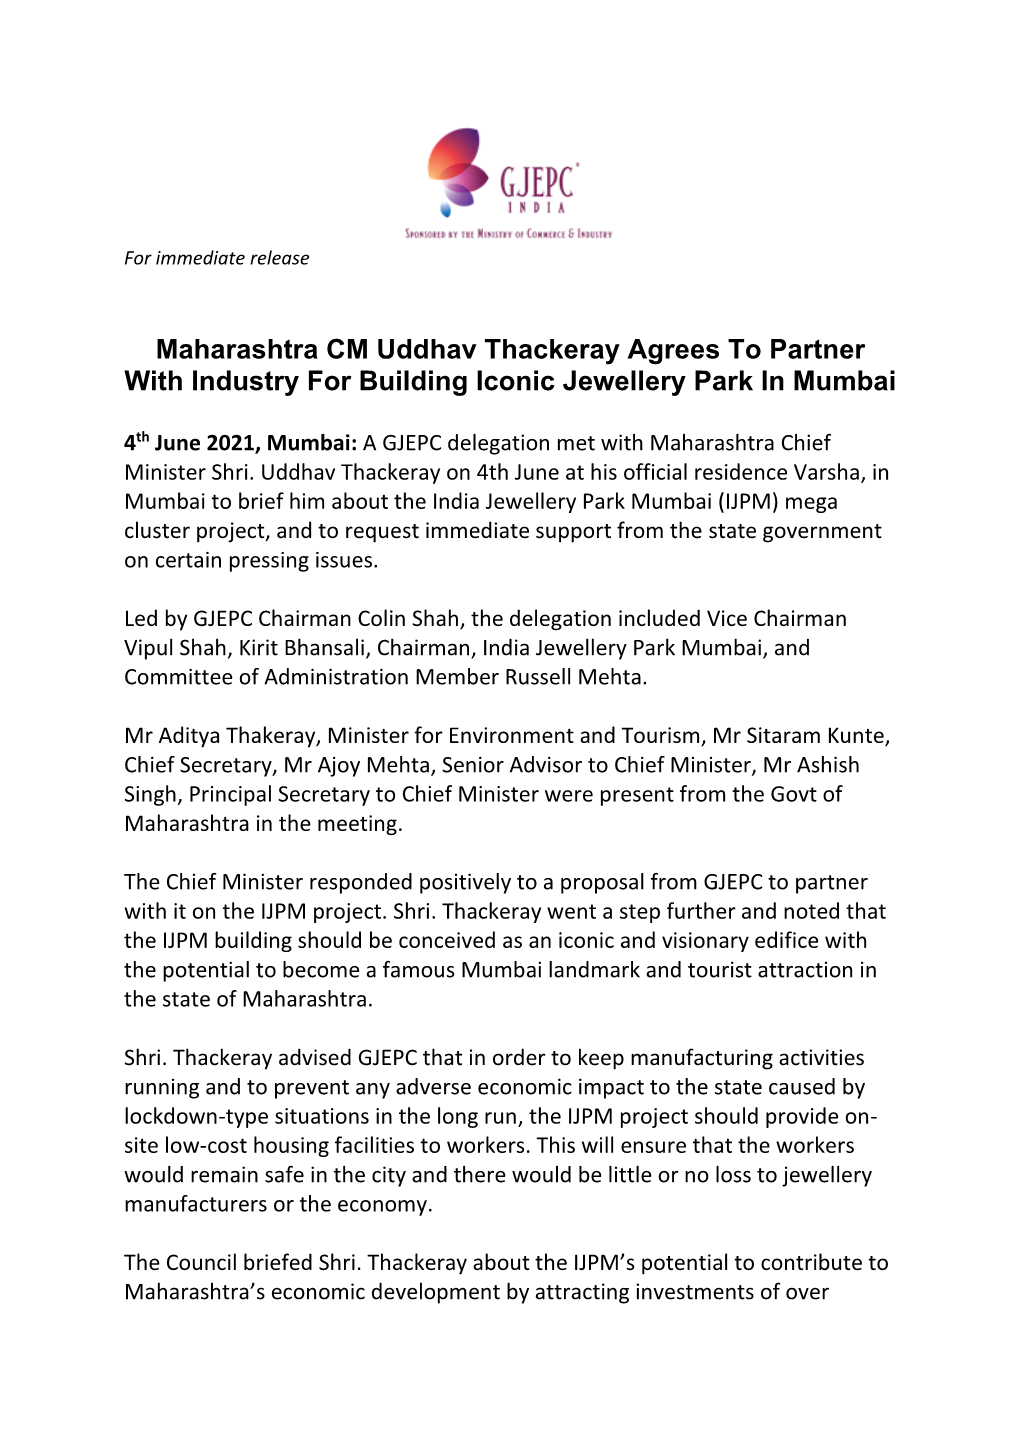 Maharashtra CM Uddhav Thackeray Agrees to Partner with Industry for Building Iconic Jewellery Park in Mumbai